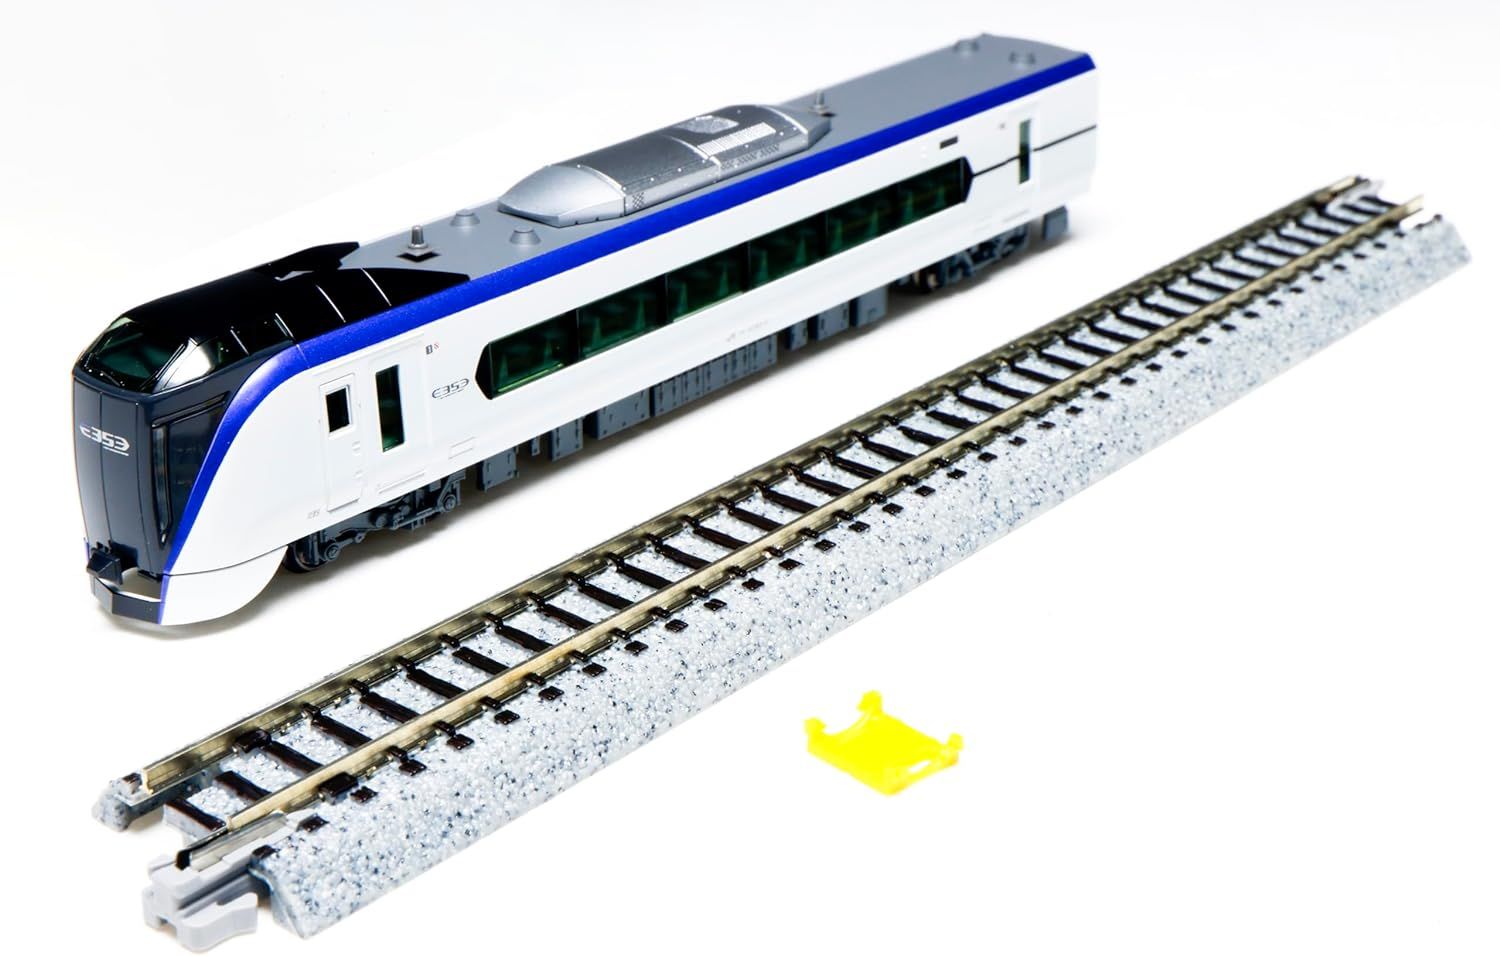 KATO 12-006 N Gauge Traveling N Gauge E353 Series "Fuji Traveling" Railway Model Train - BanzaiHobby